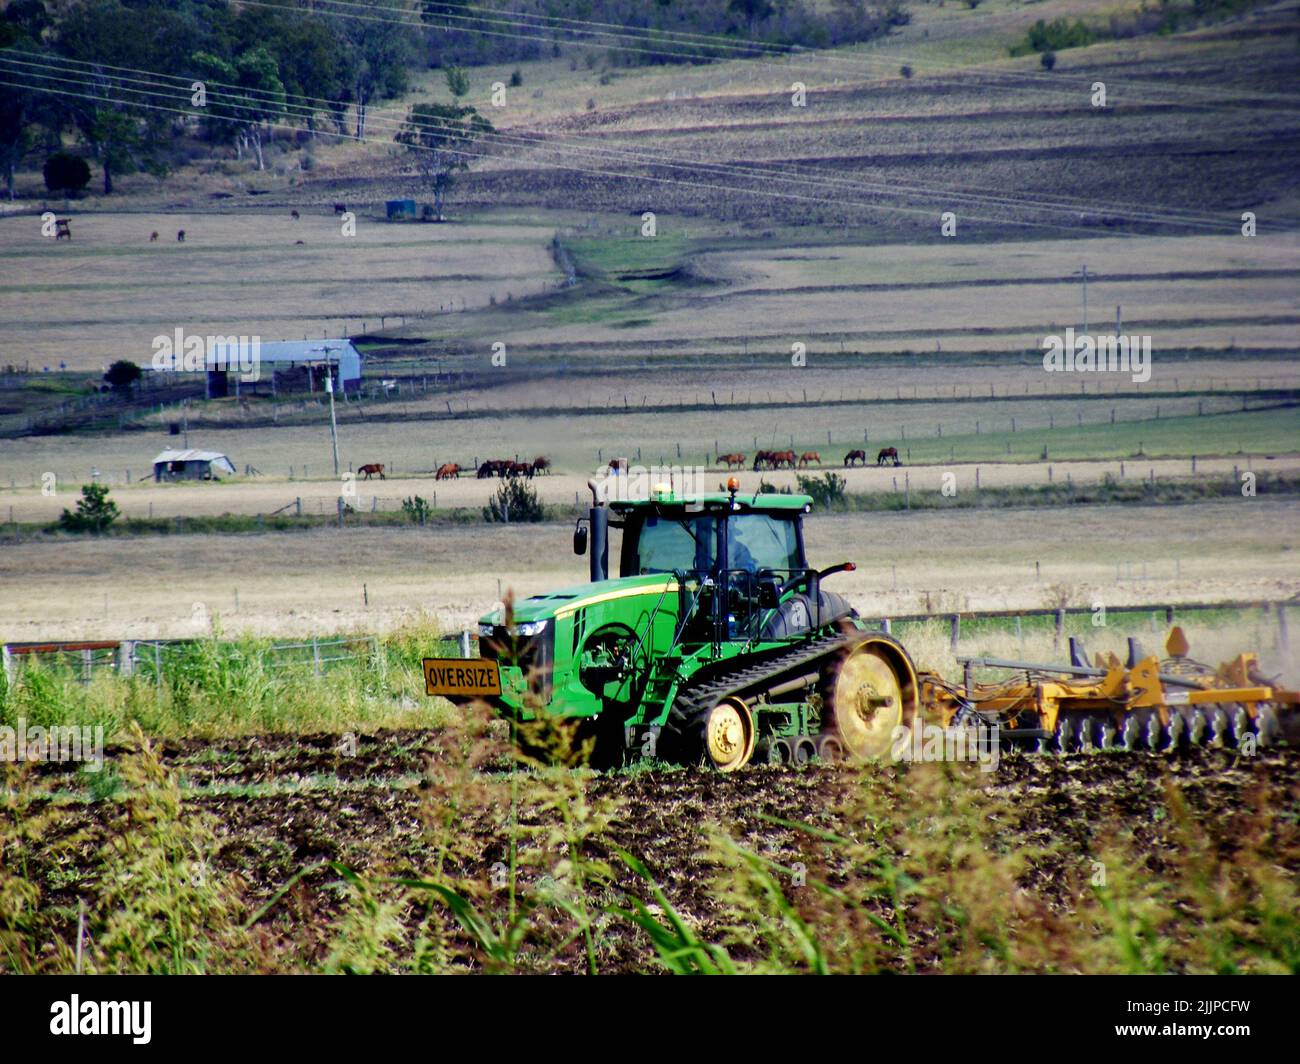 A tractor working on a farm near Tamworth Northern NSW in Australia Stock Photo